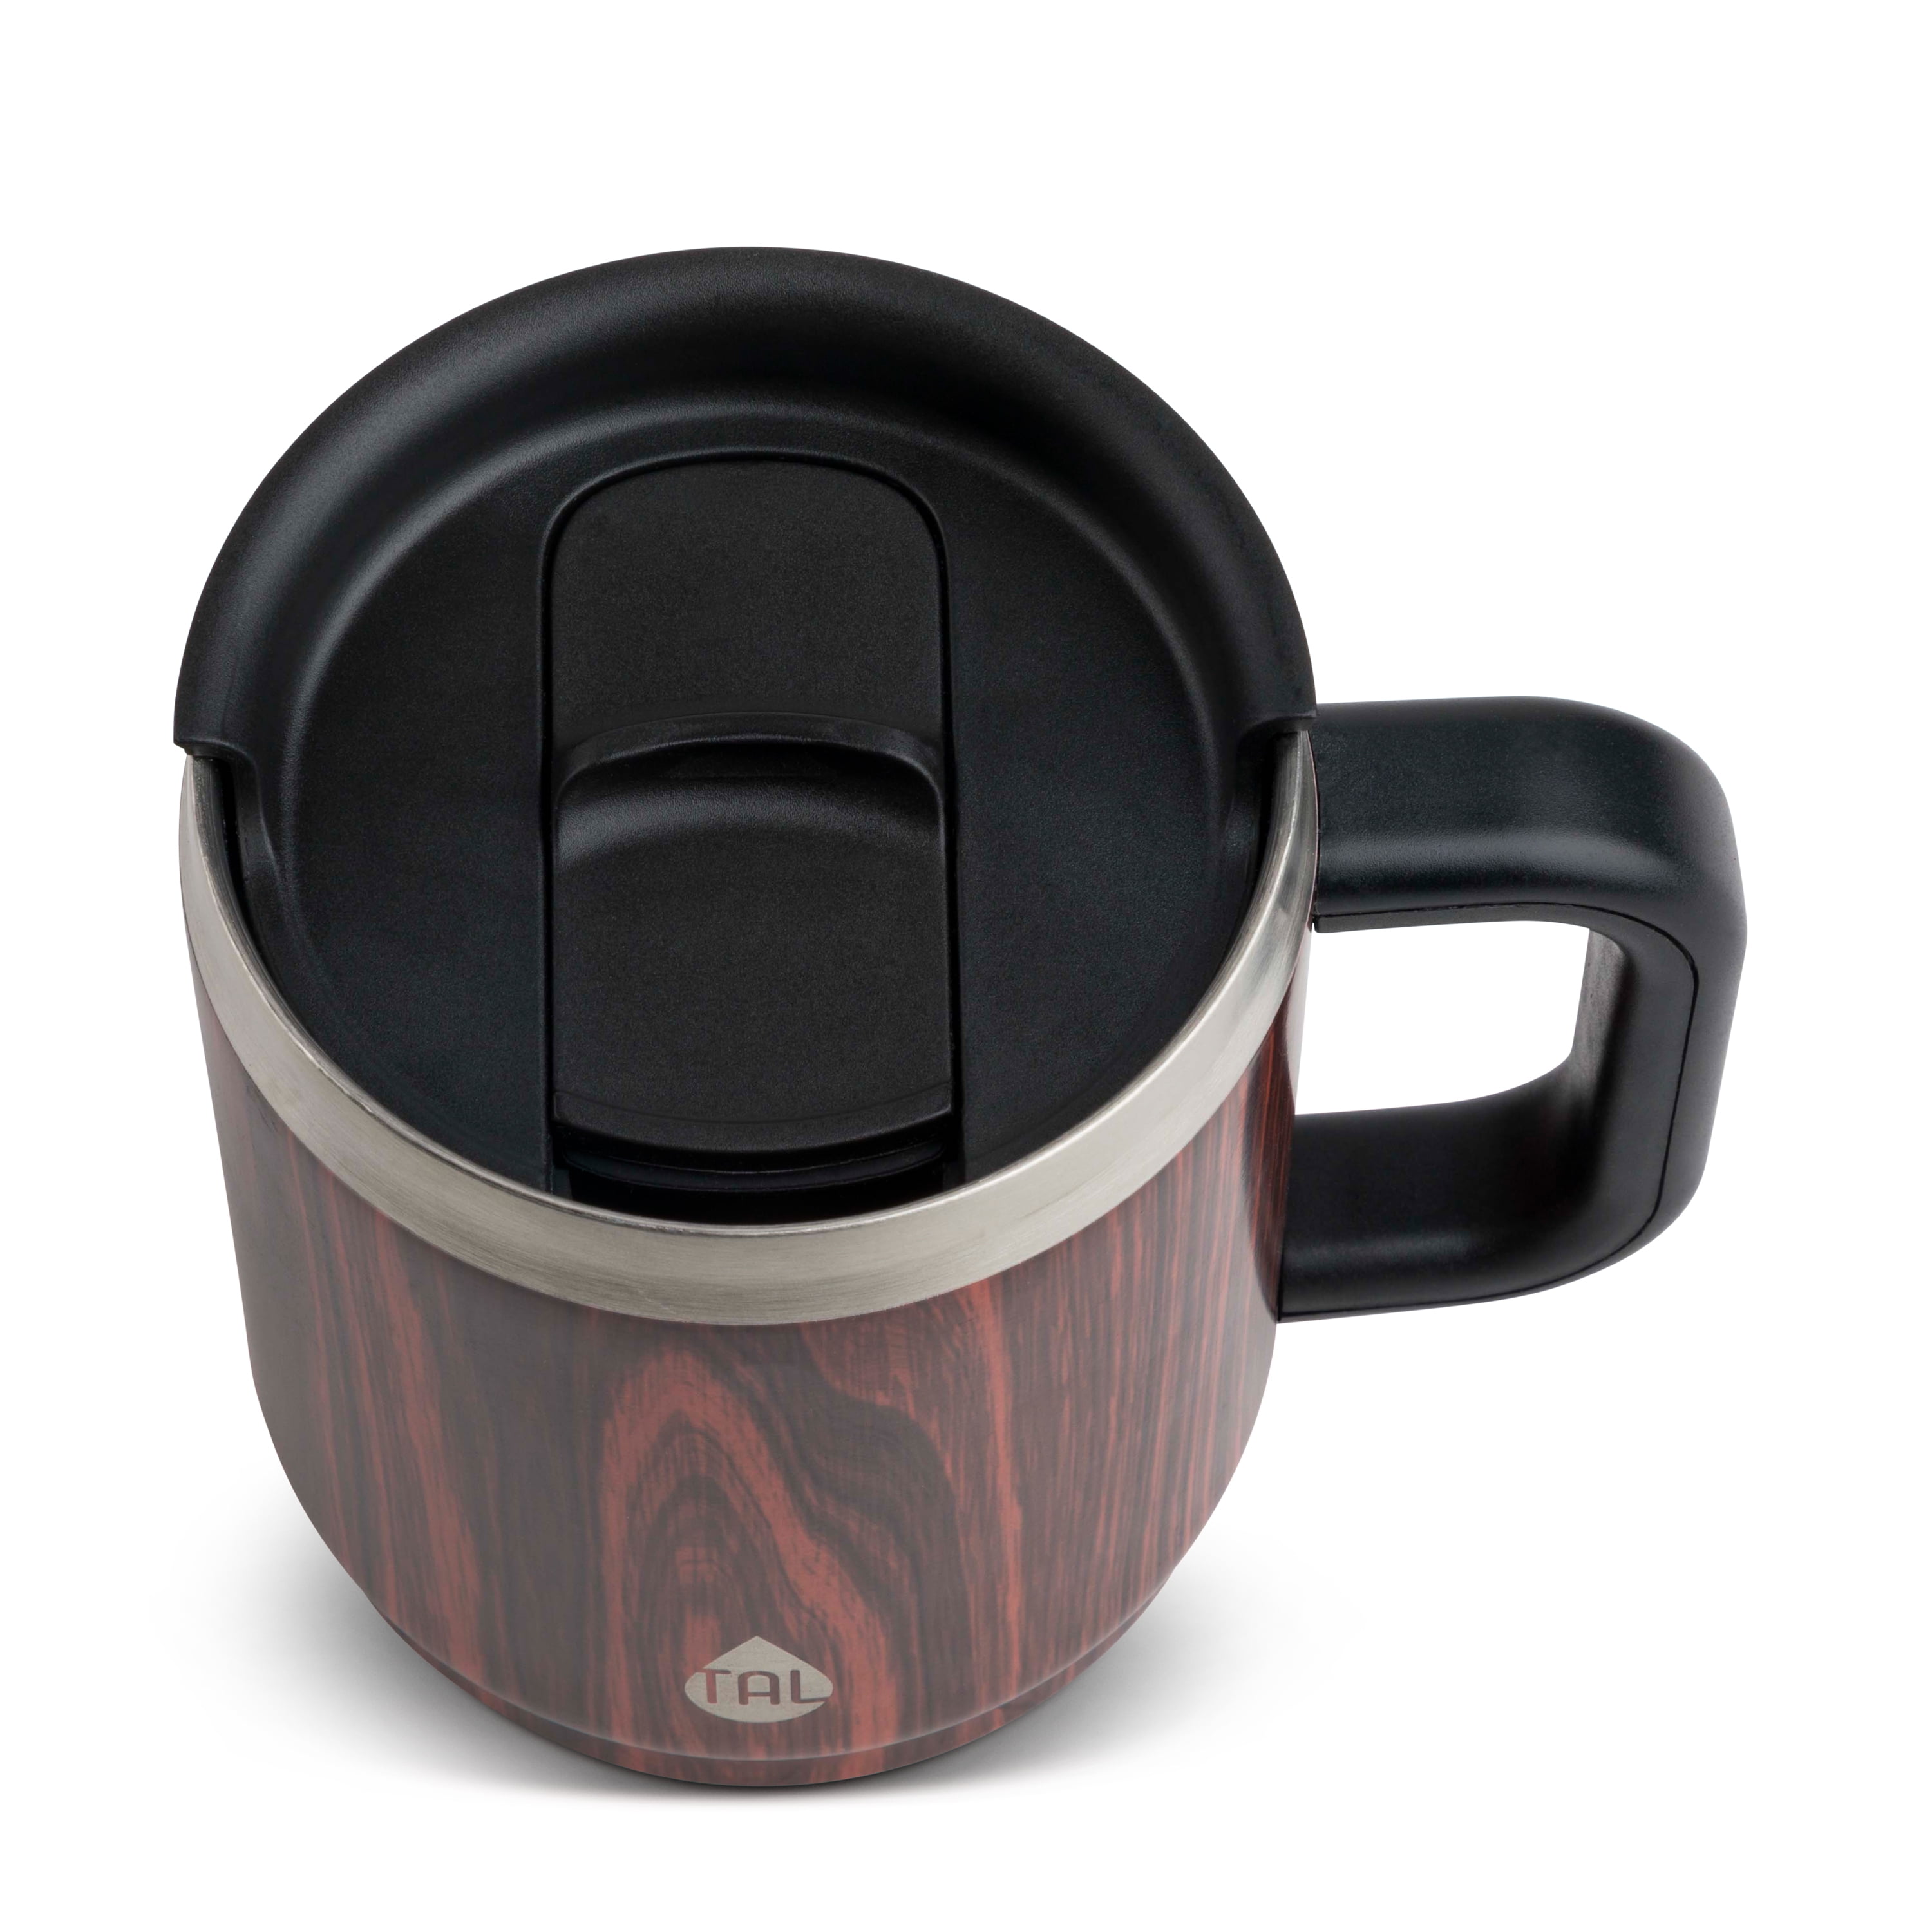 TAL Stainless Steel Boulder Coffee Mug 14oz, Teal Speckled 